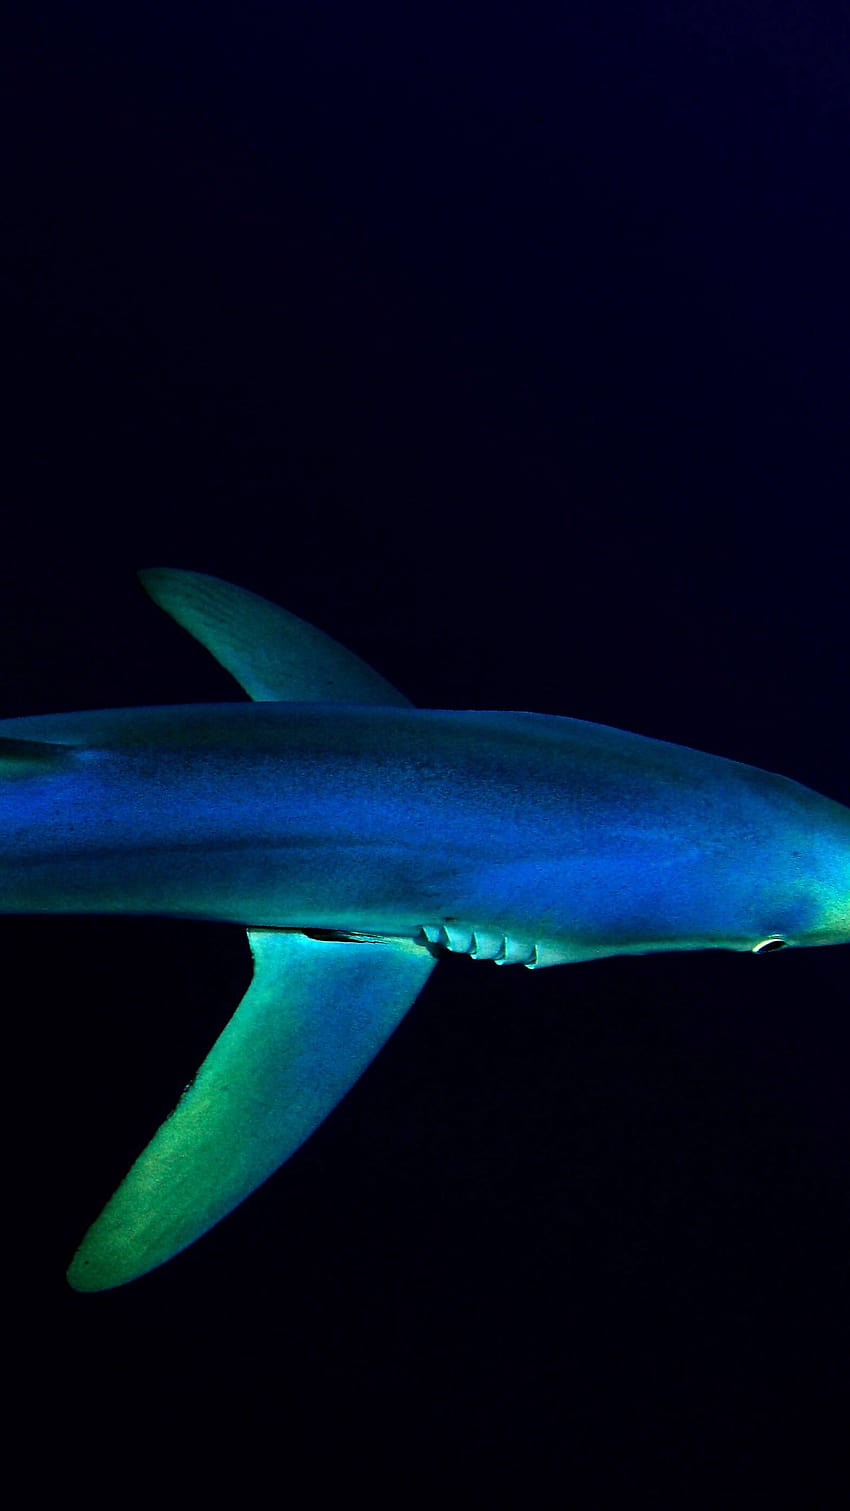 Mammoth Deep Blue shark photos go viral – Boston Herald